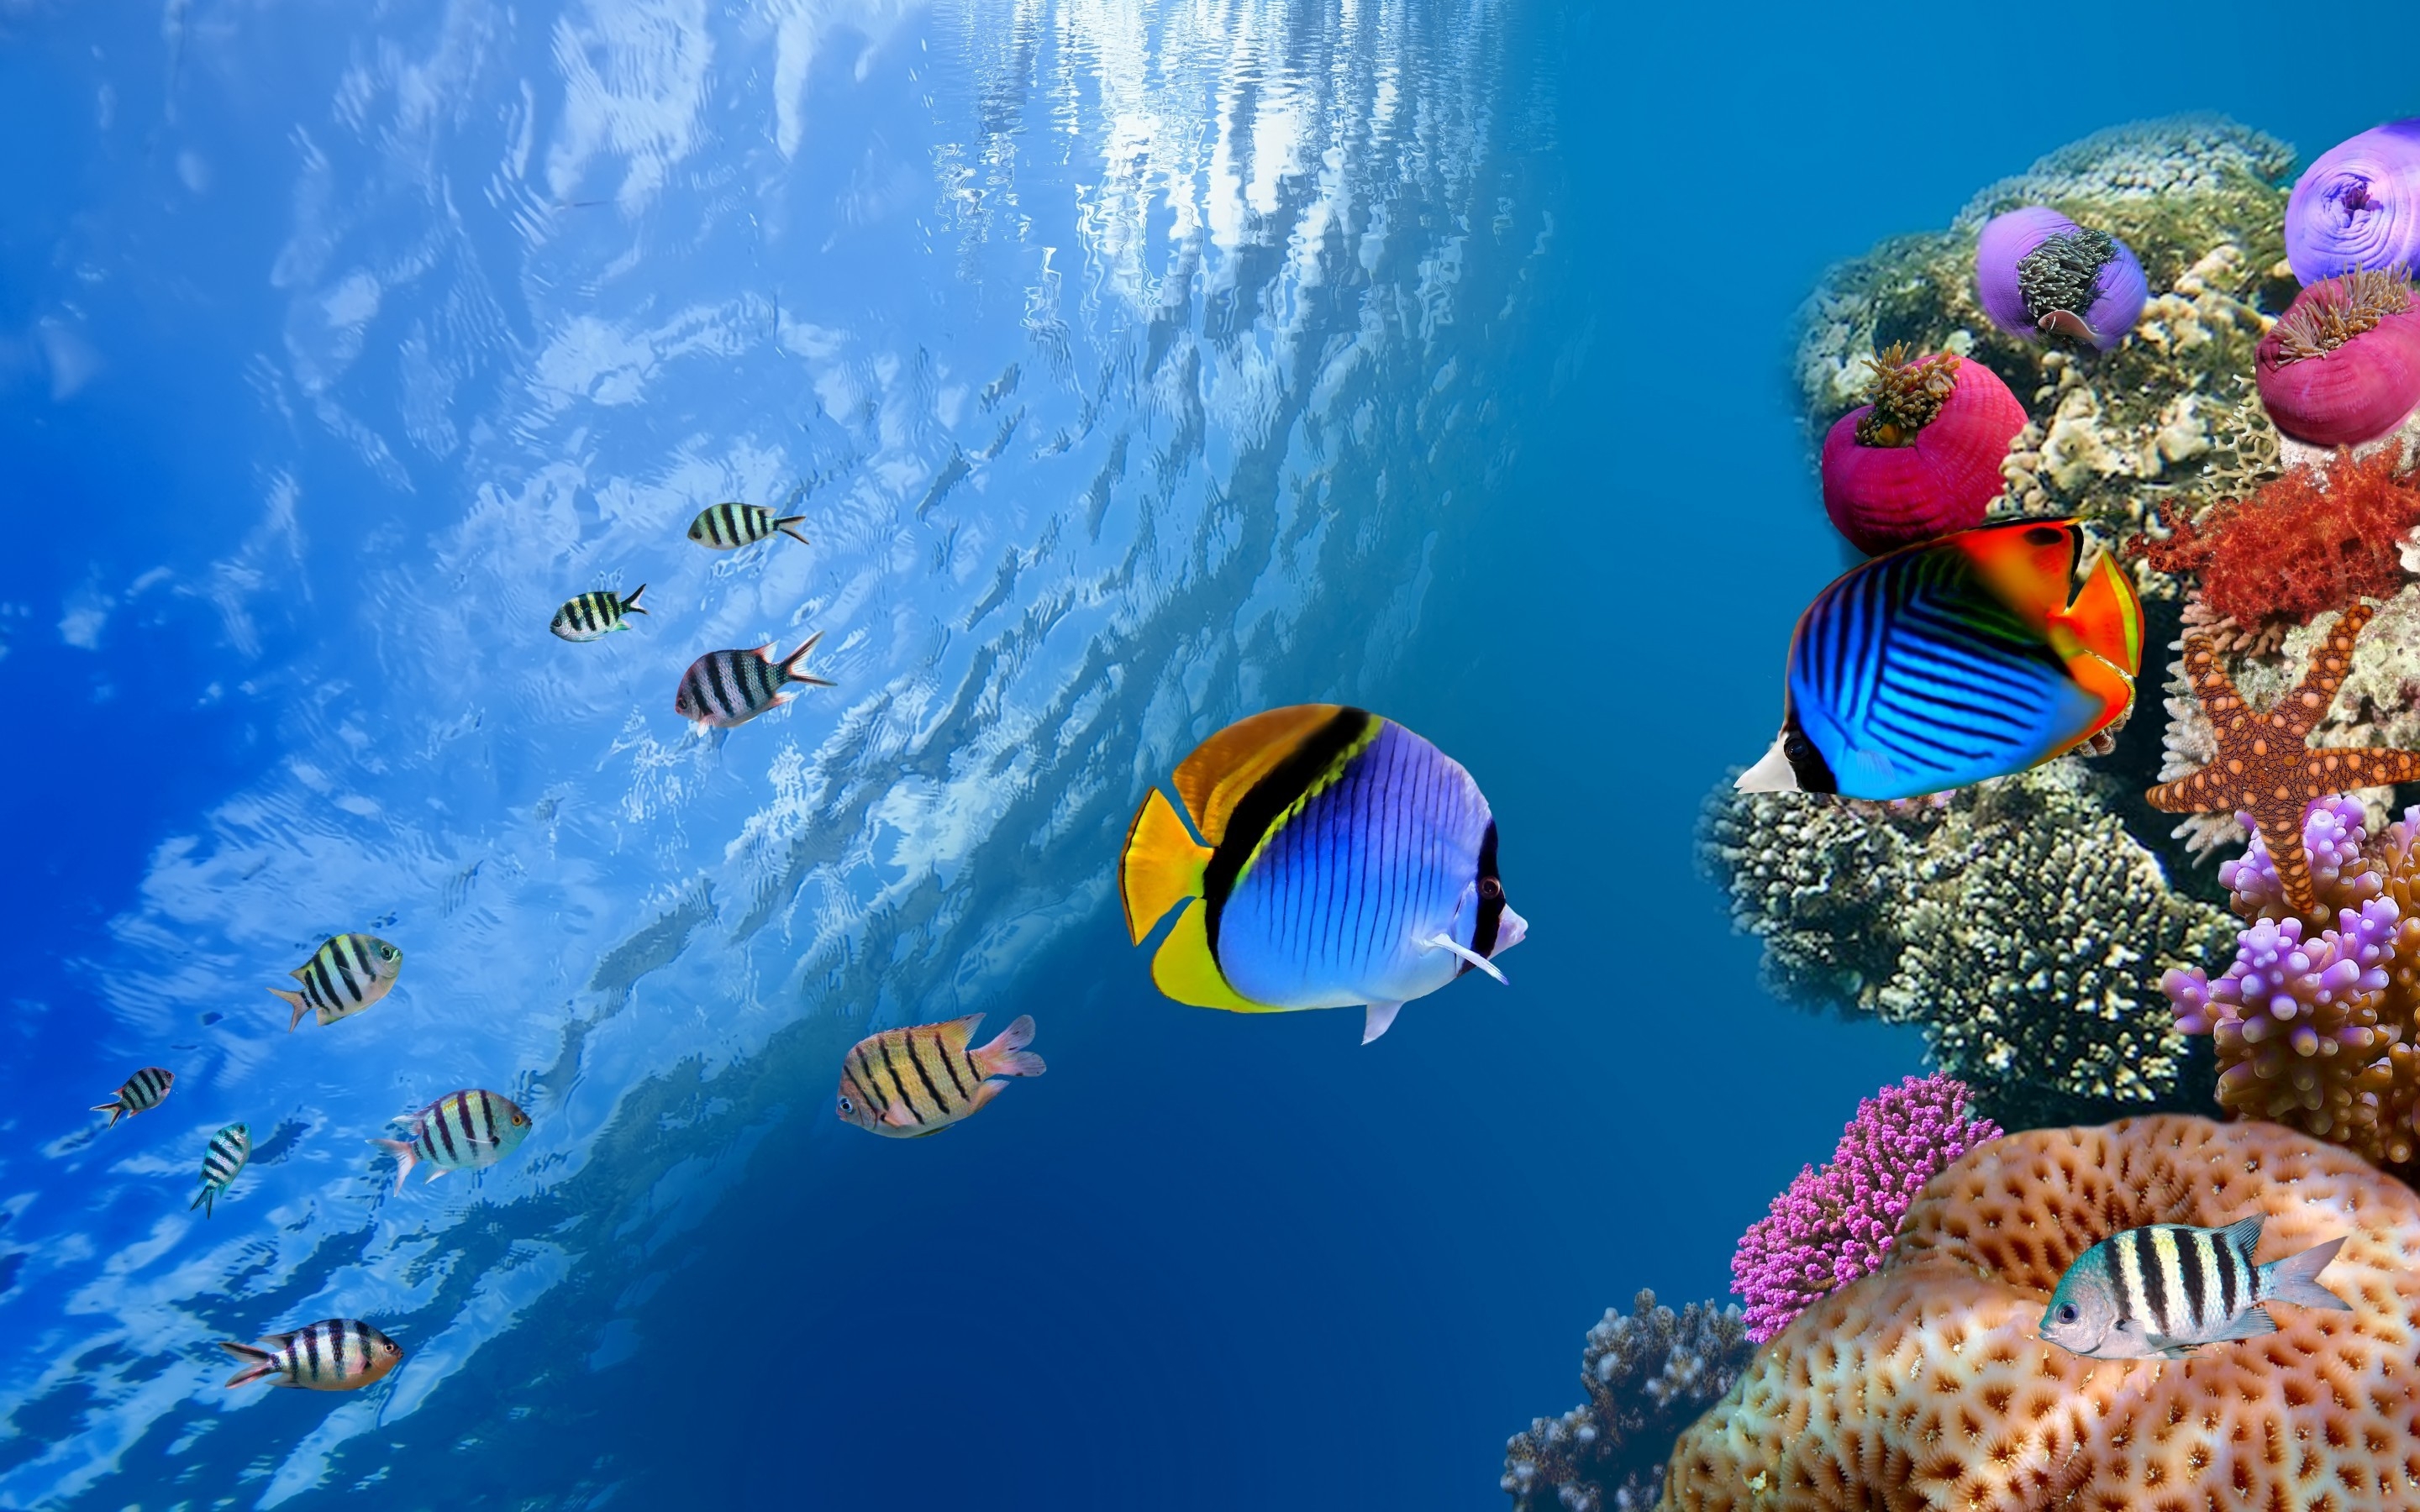 Underwater Coral Scene for 2880 x 1800 Retina Display resolution